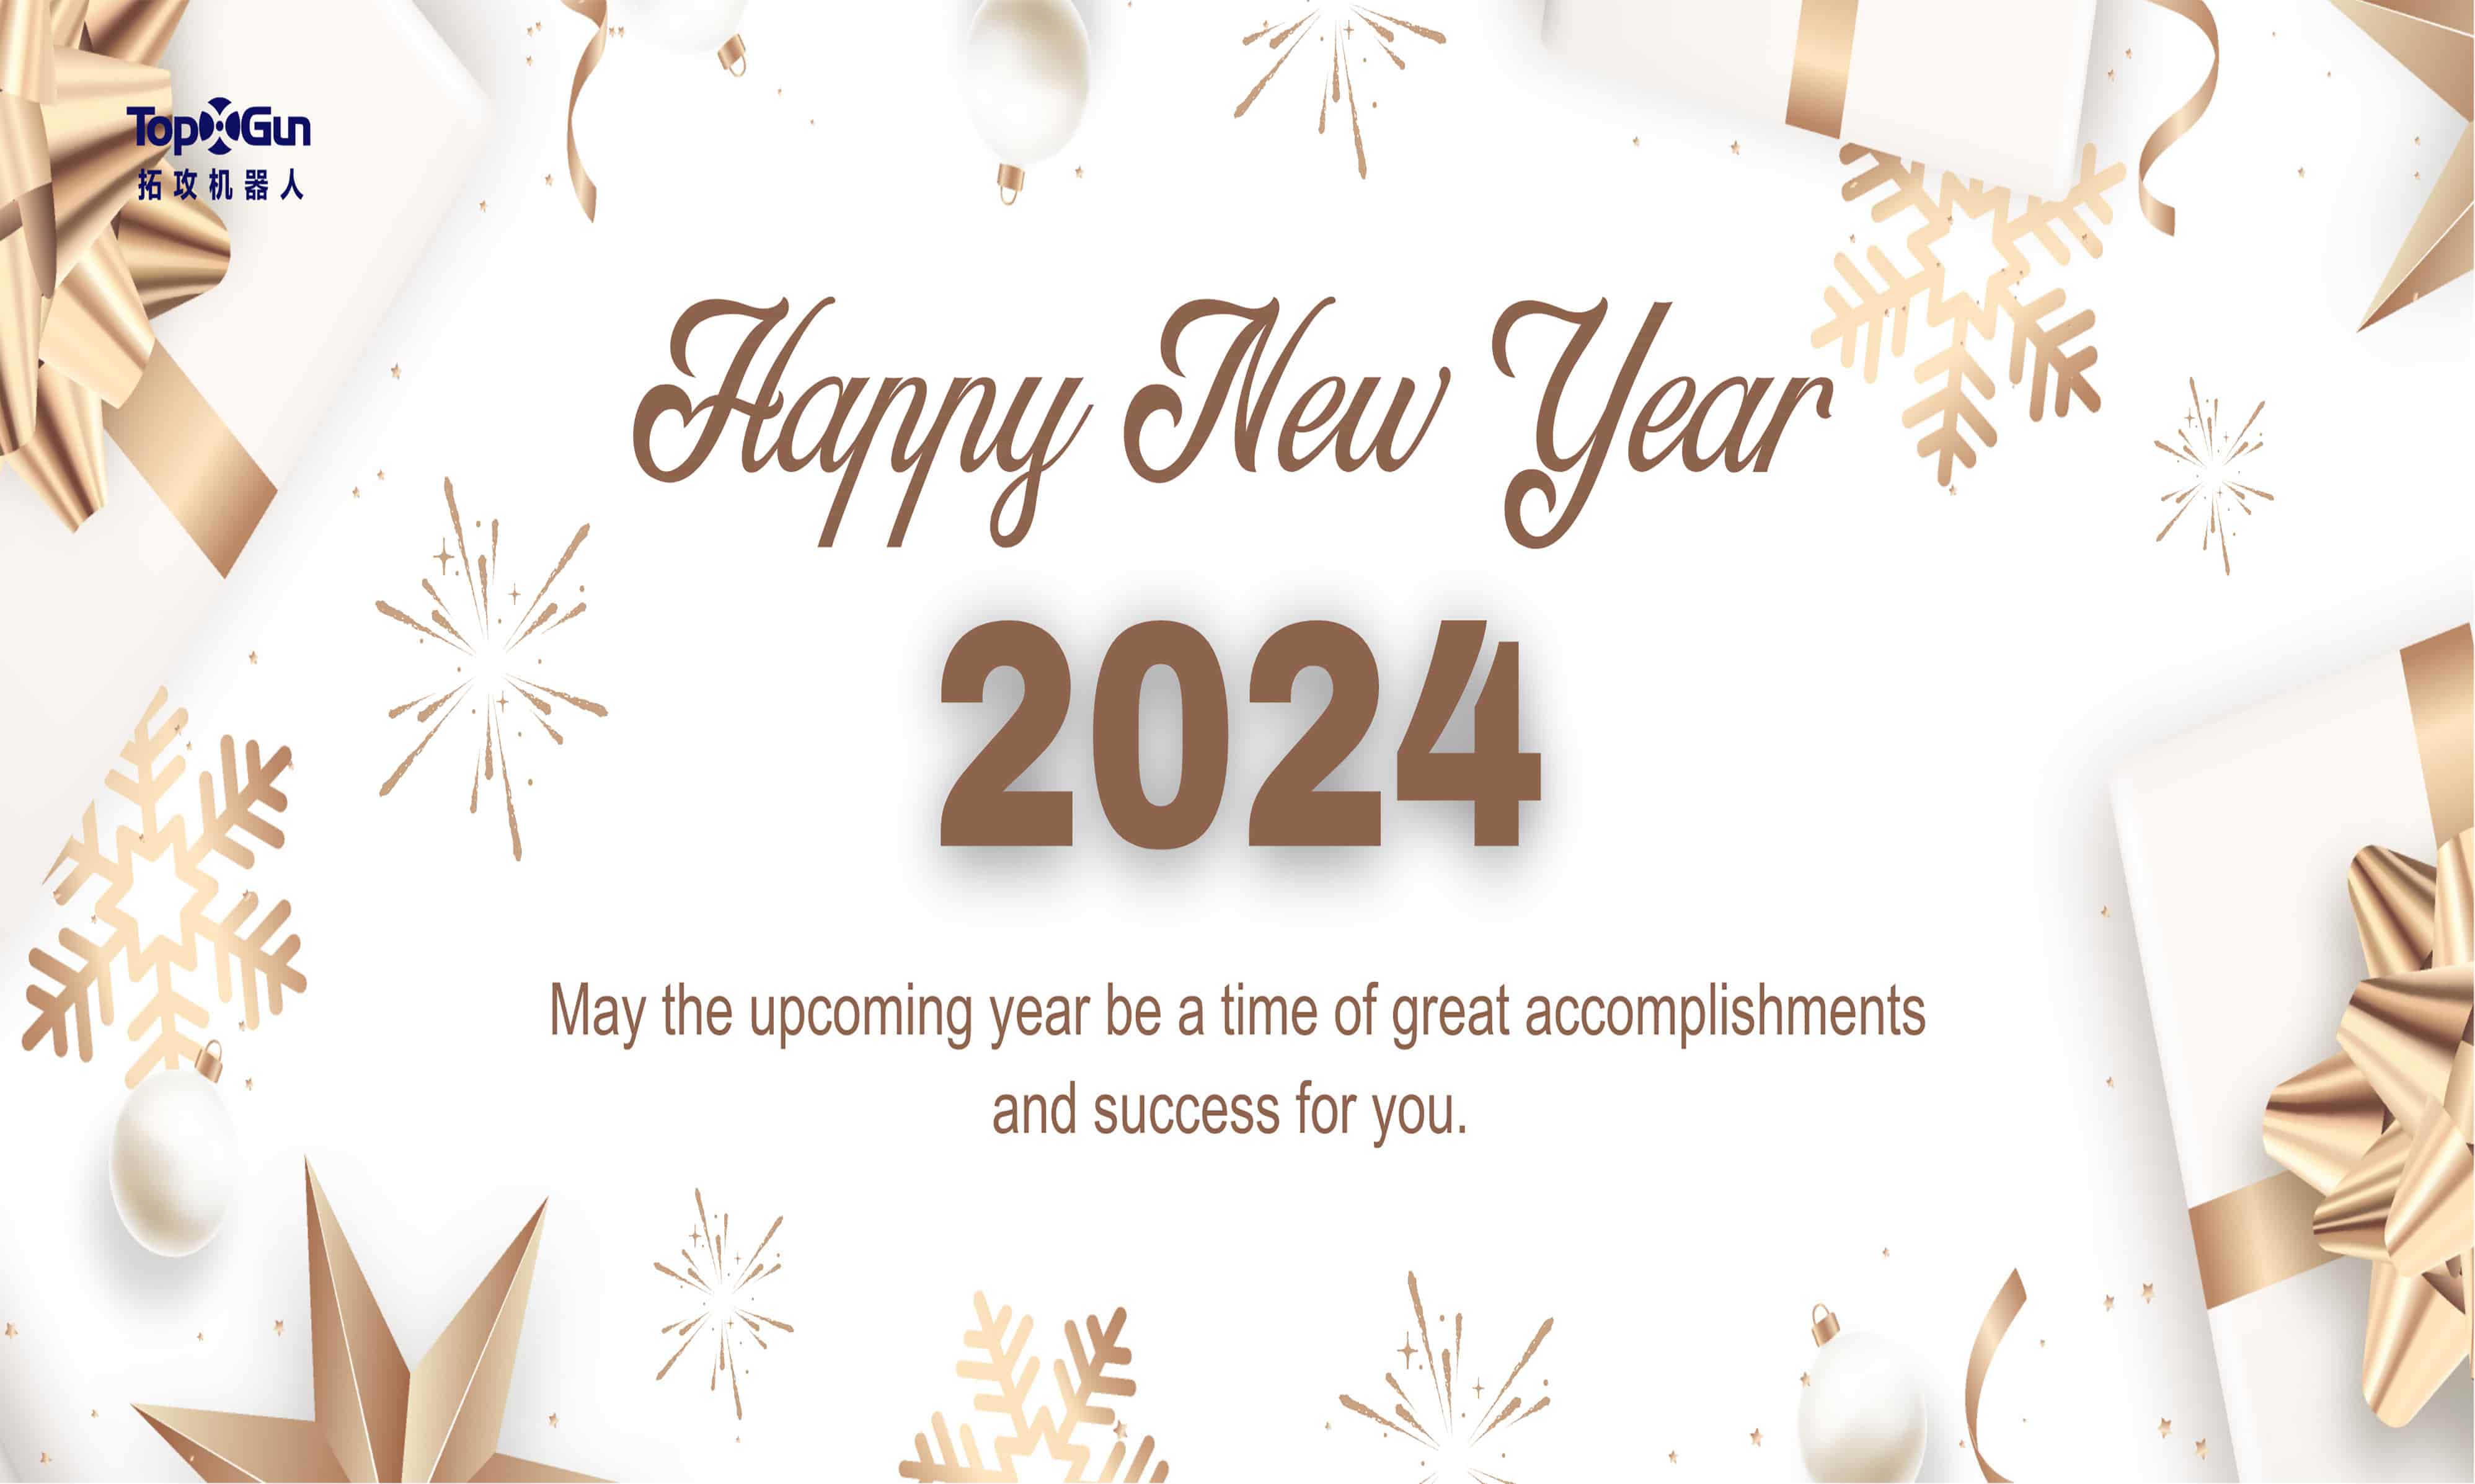 Topxgun Welcomes New Year 2024!